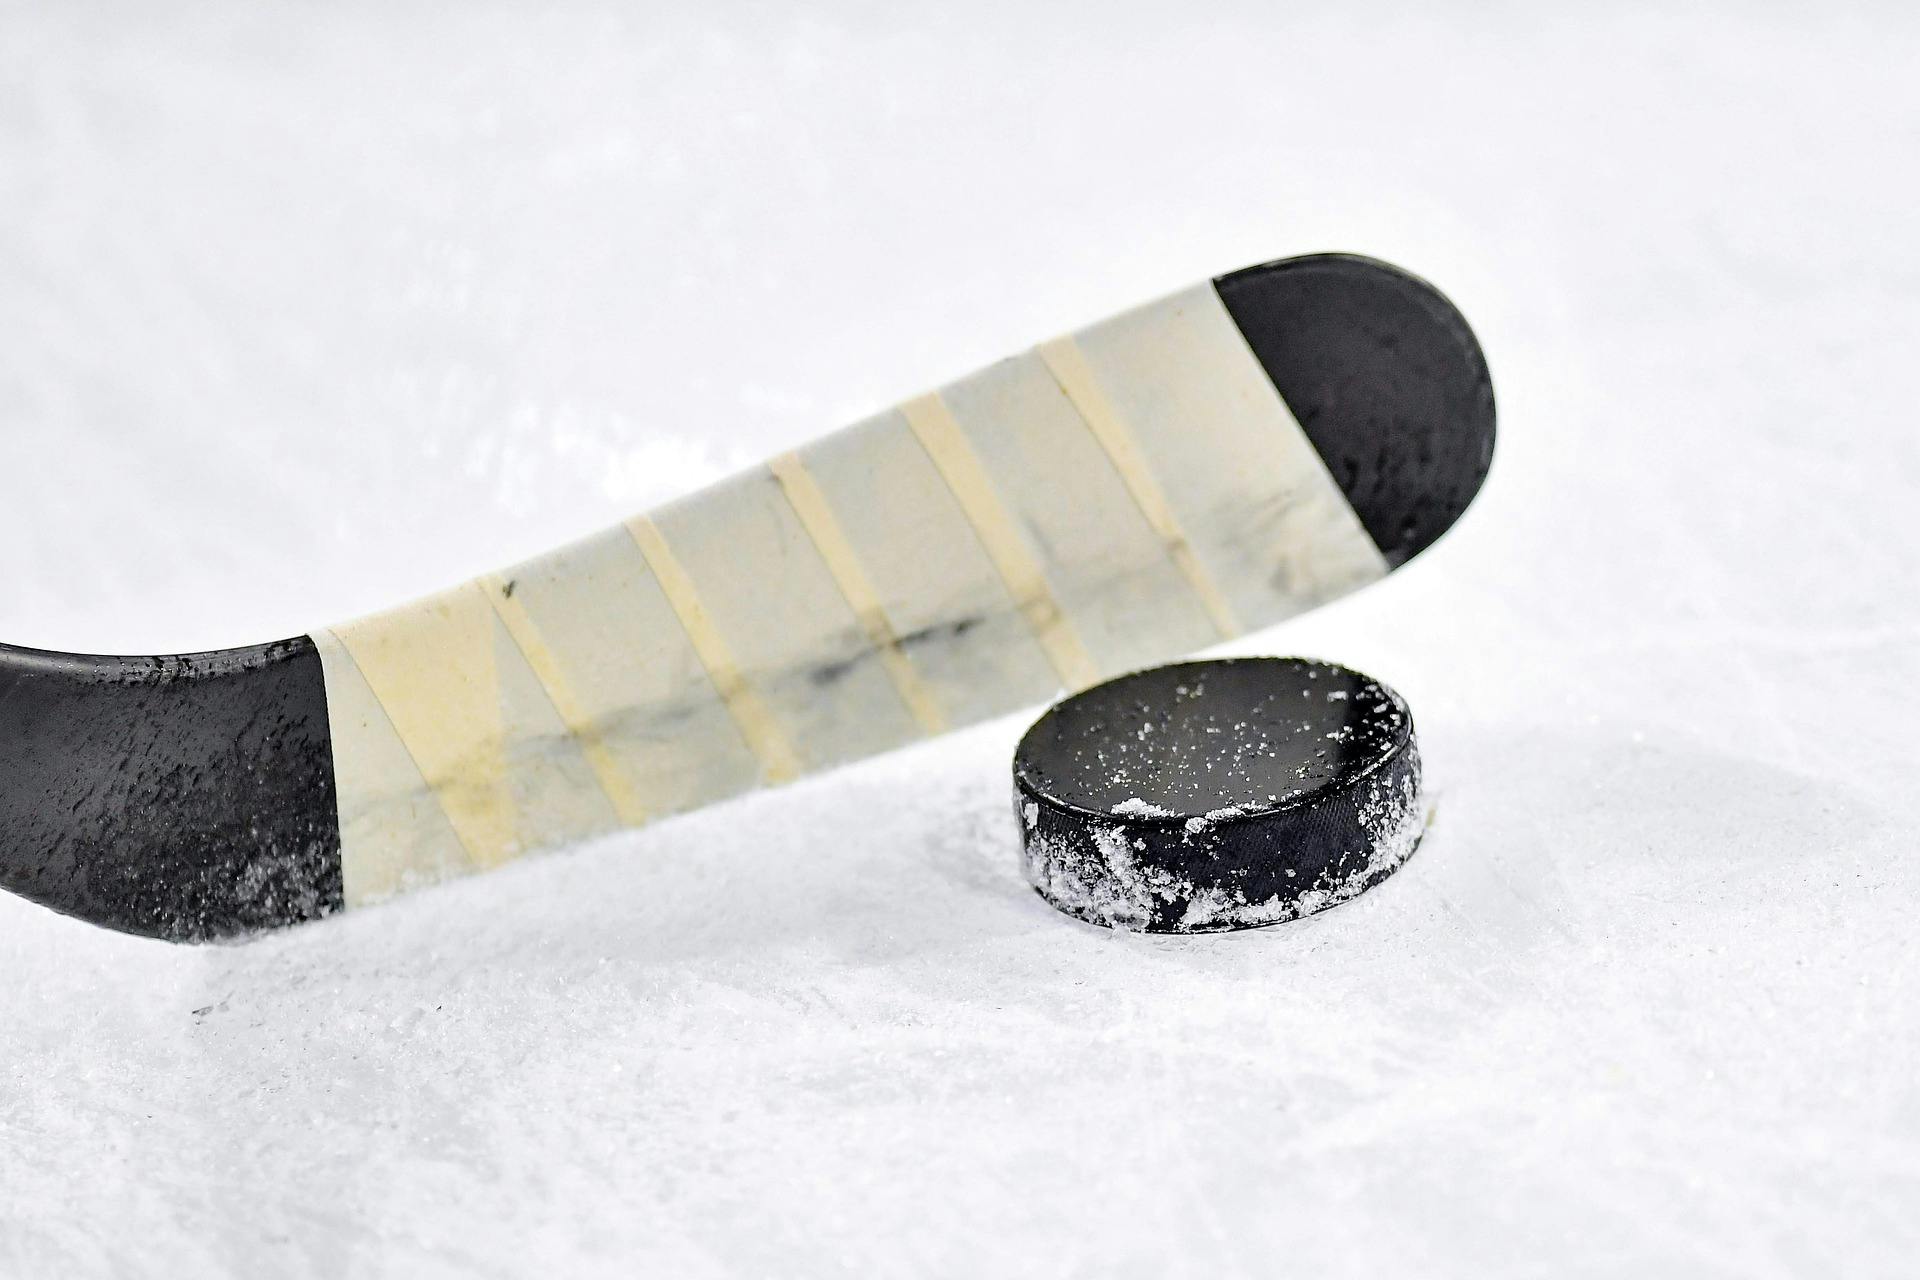 Ice hockey puck